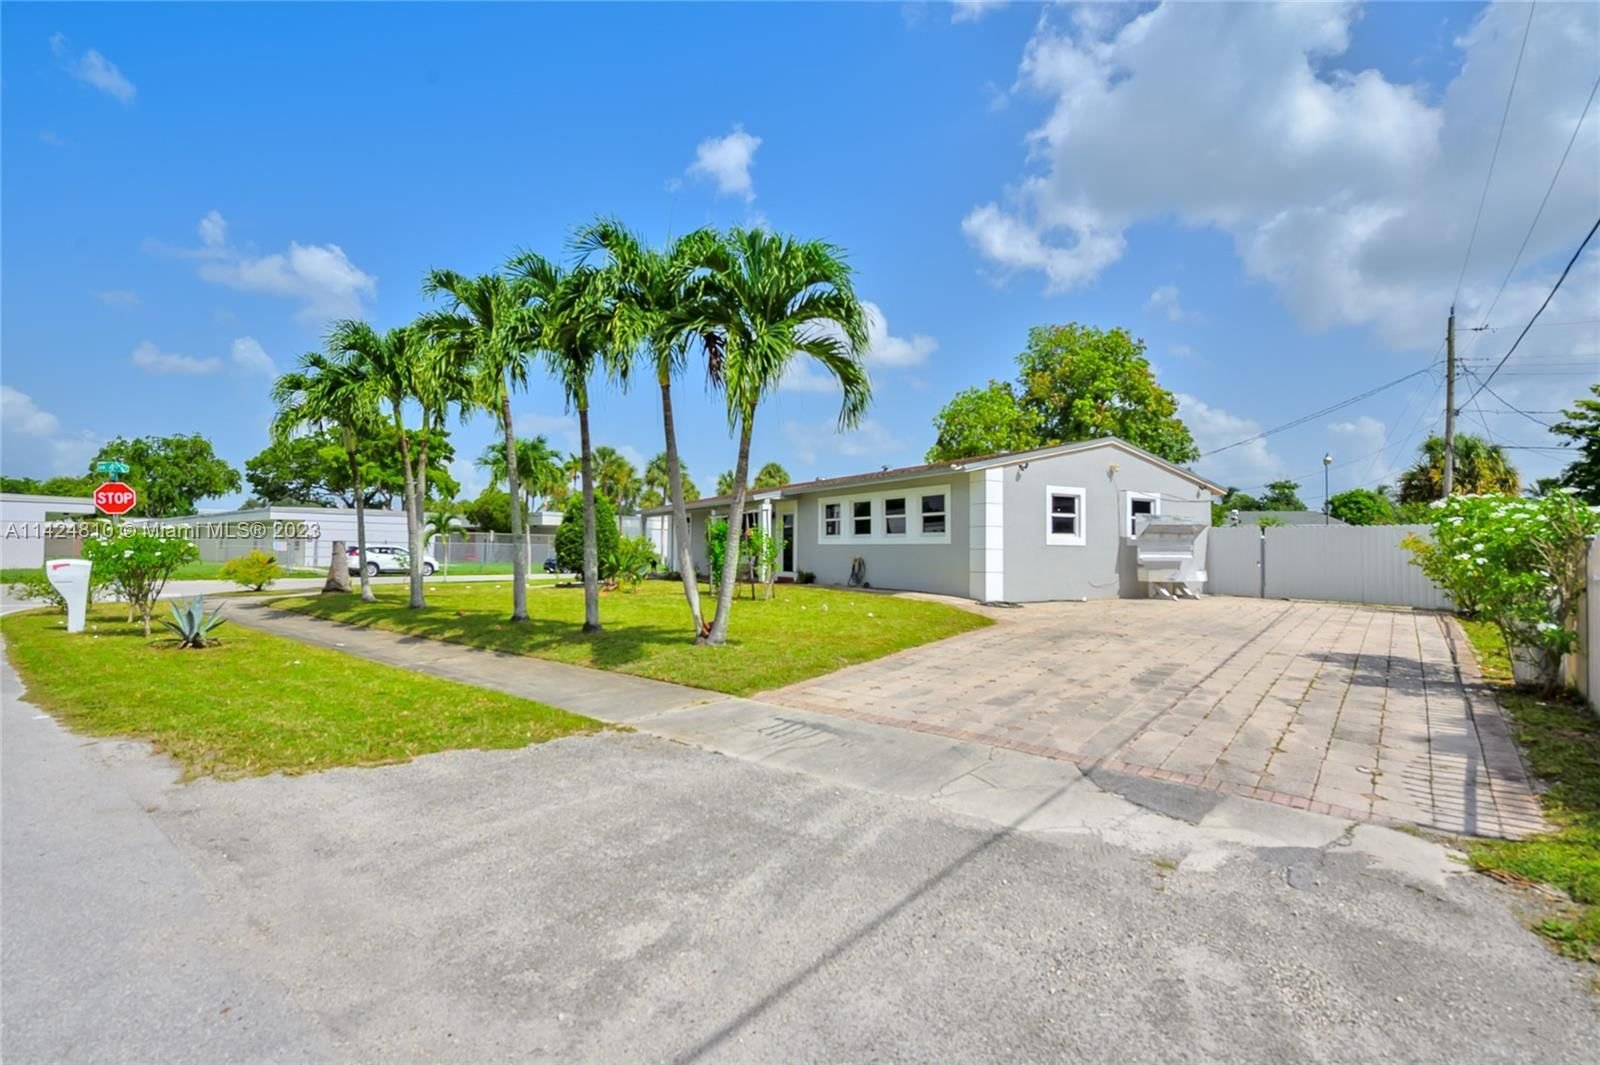 Real estate property located at 4921 176th St, Miami-Dade County, Miami Gardens, FL